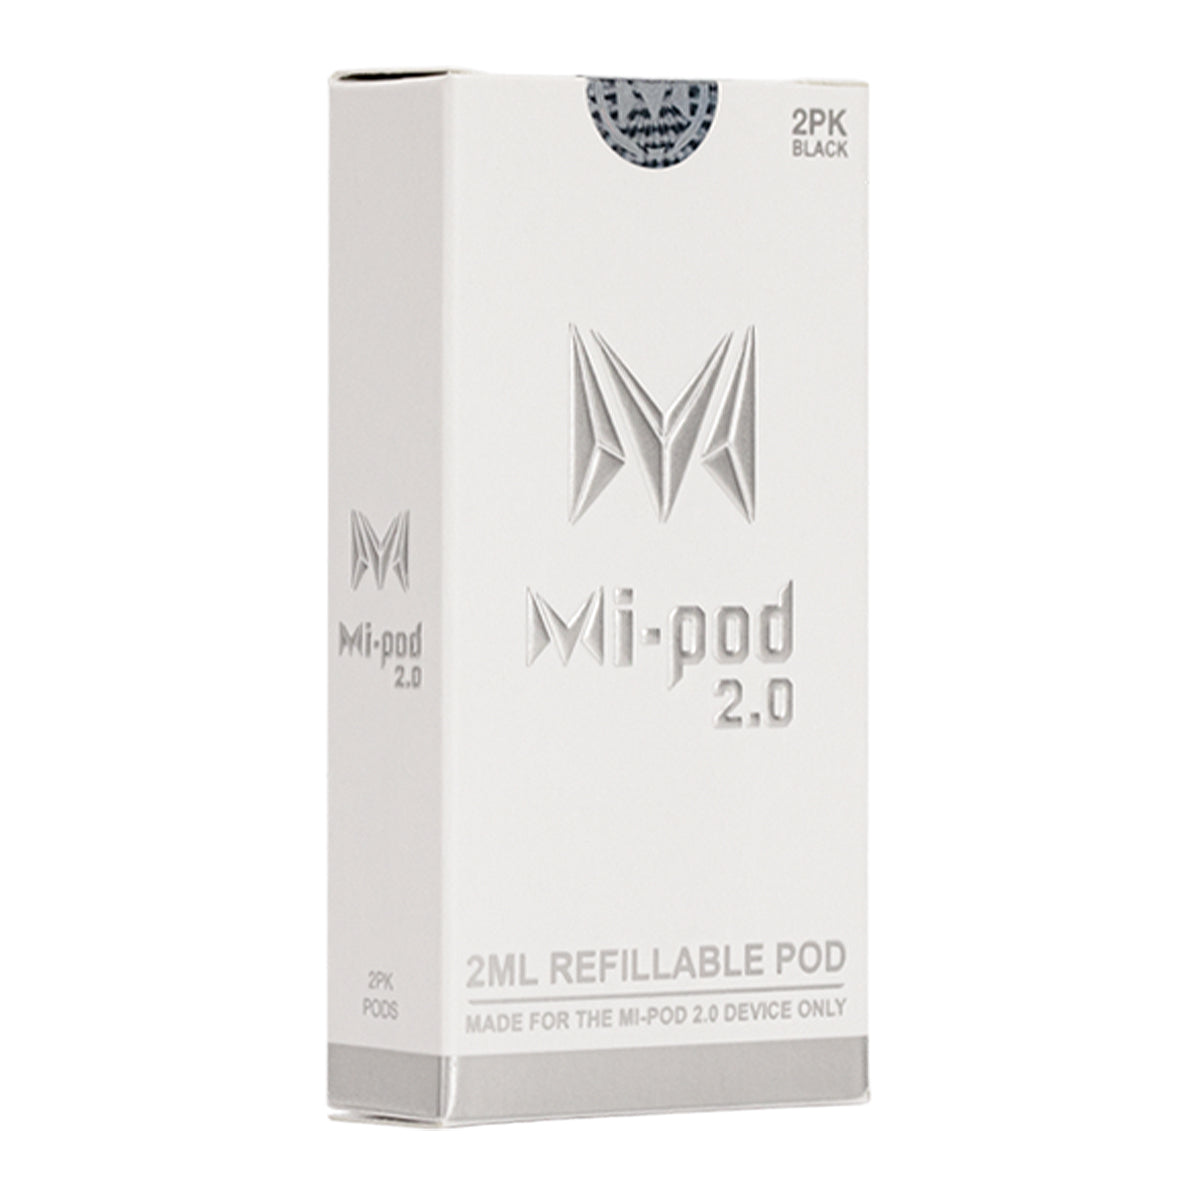 Mi-Pod 2.0 Refillable Pods by Mi-One Brands